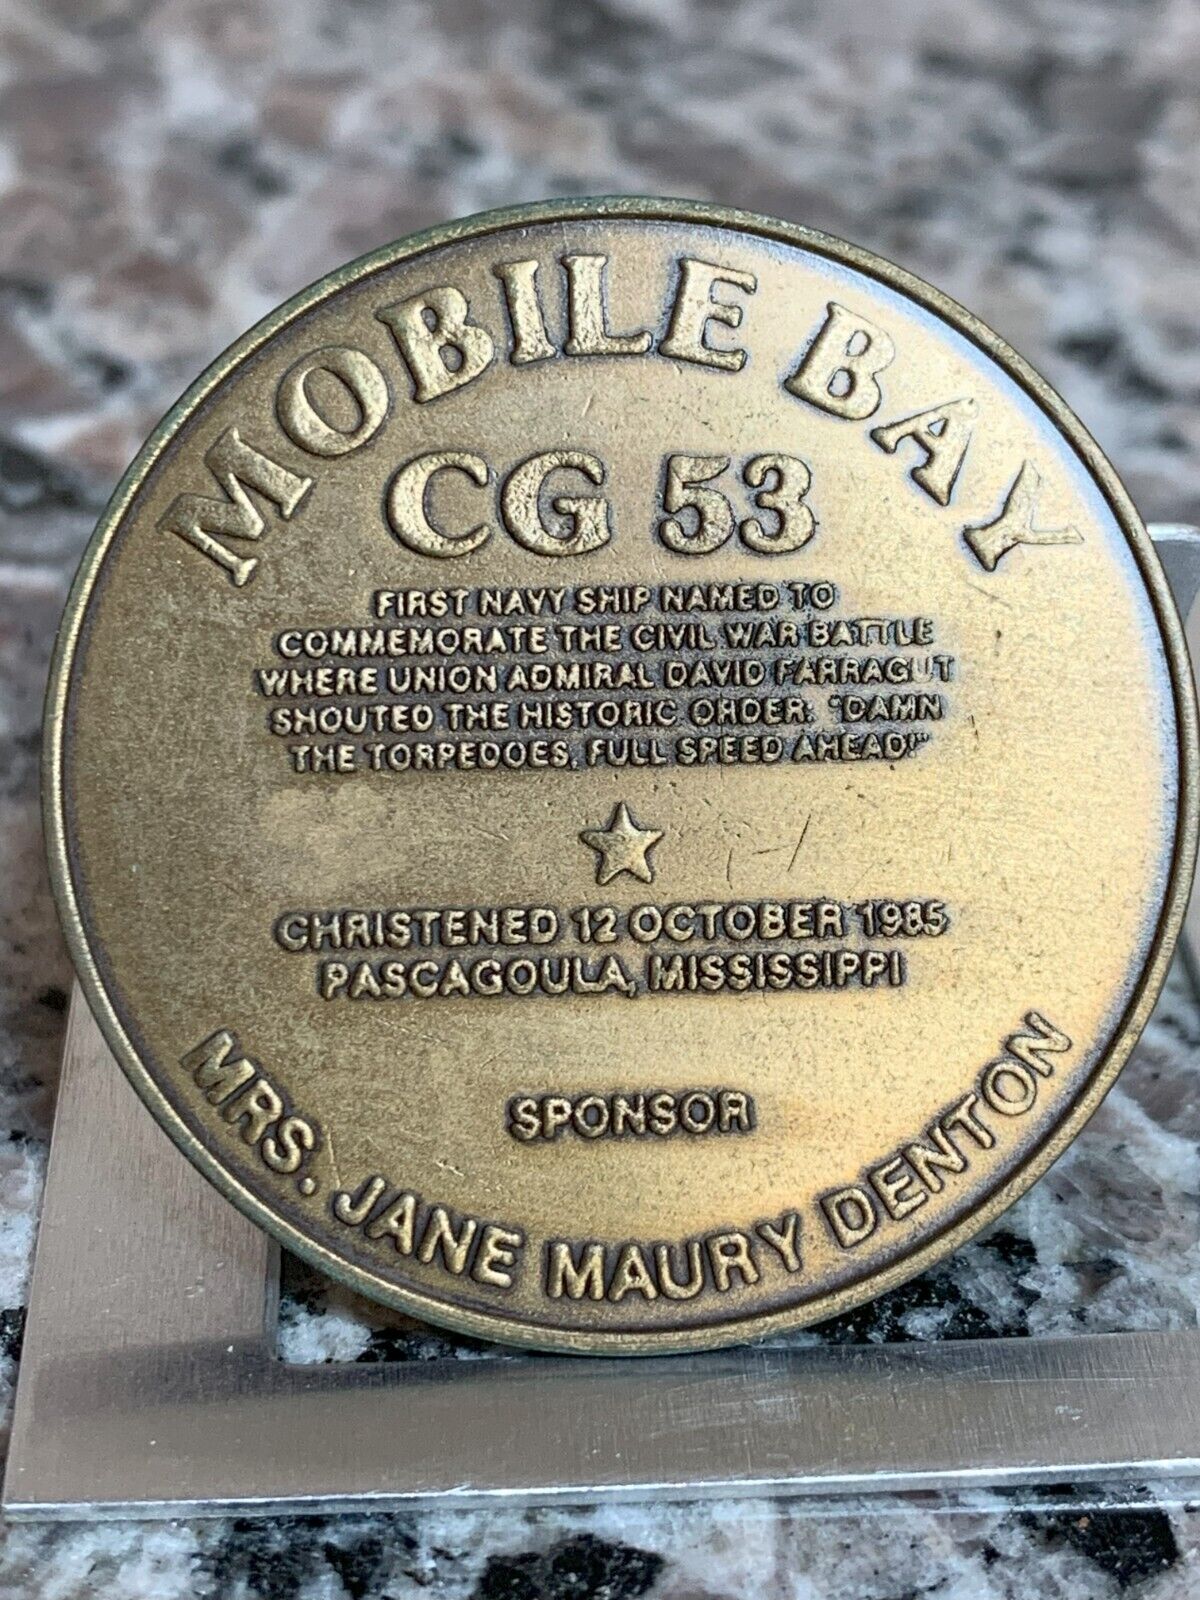 USS Mobile Bay CG 53 christening coin medal October 12, 1985